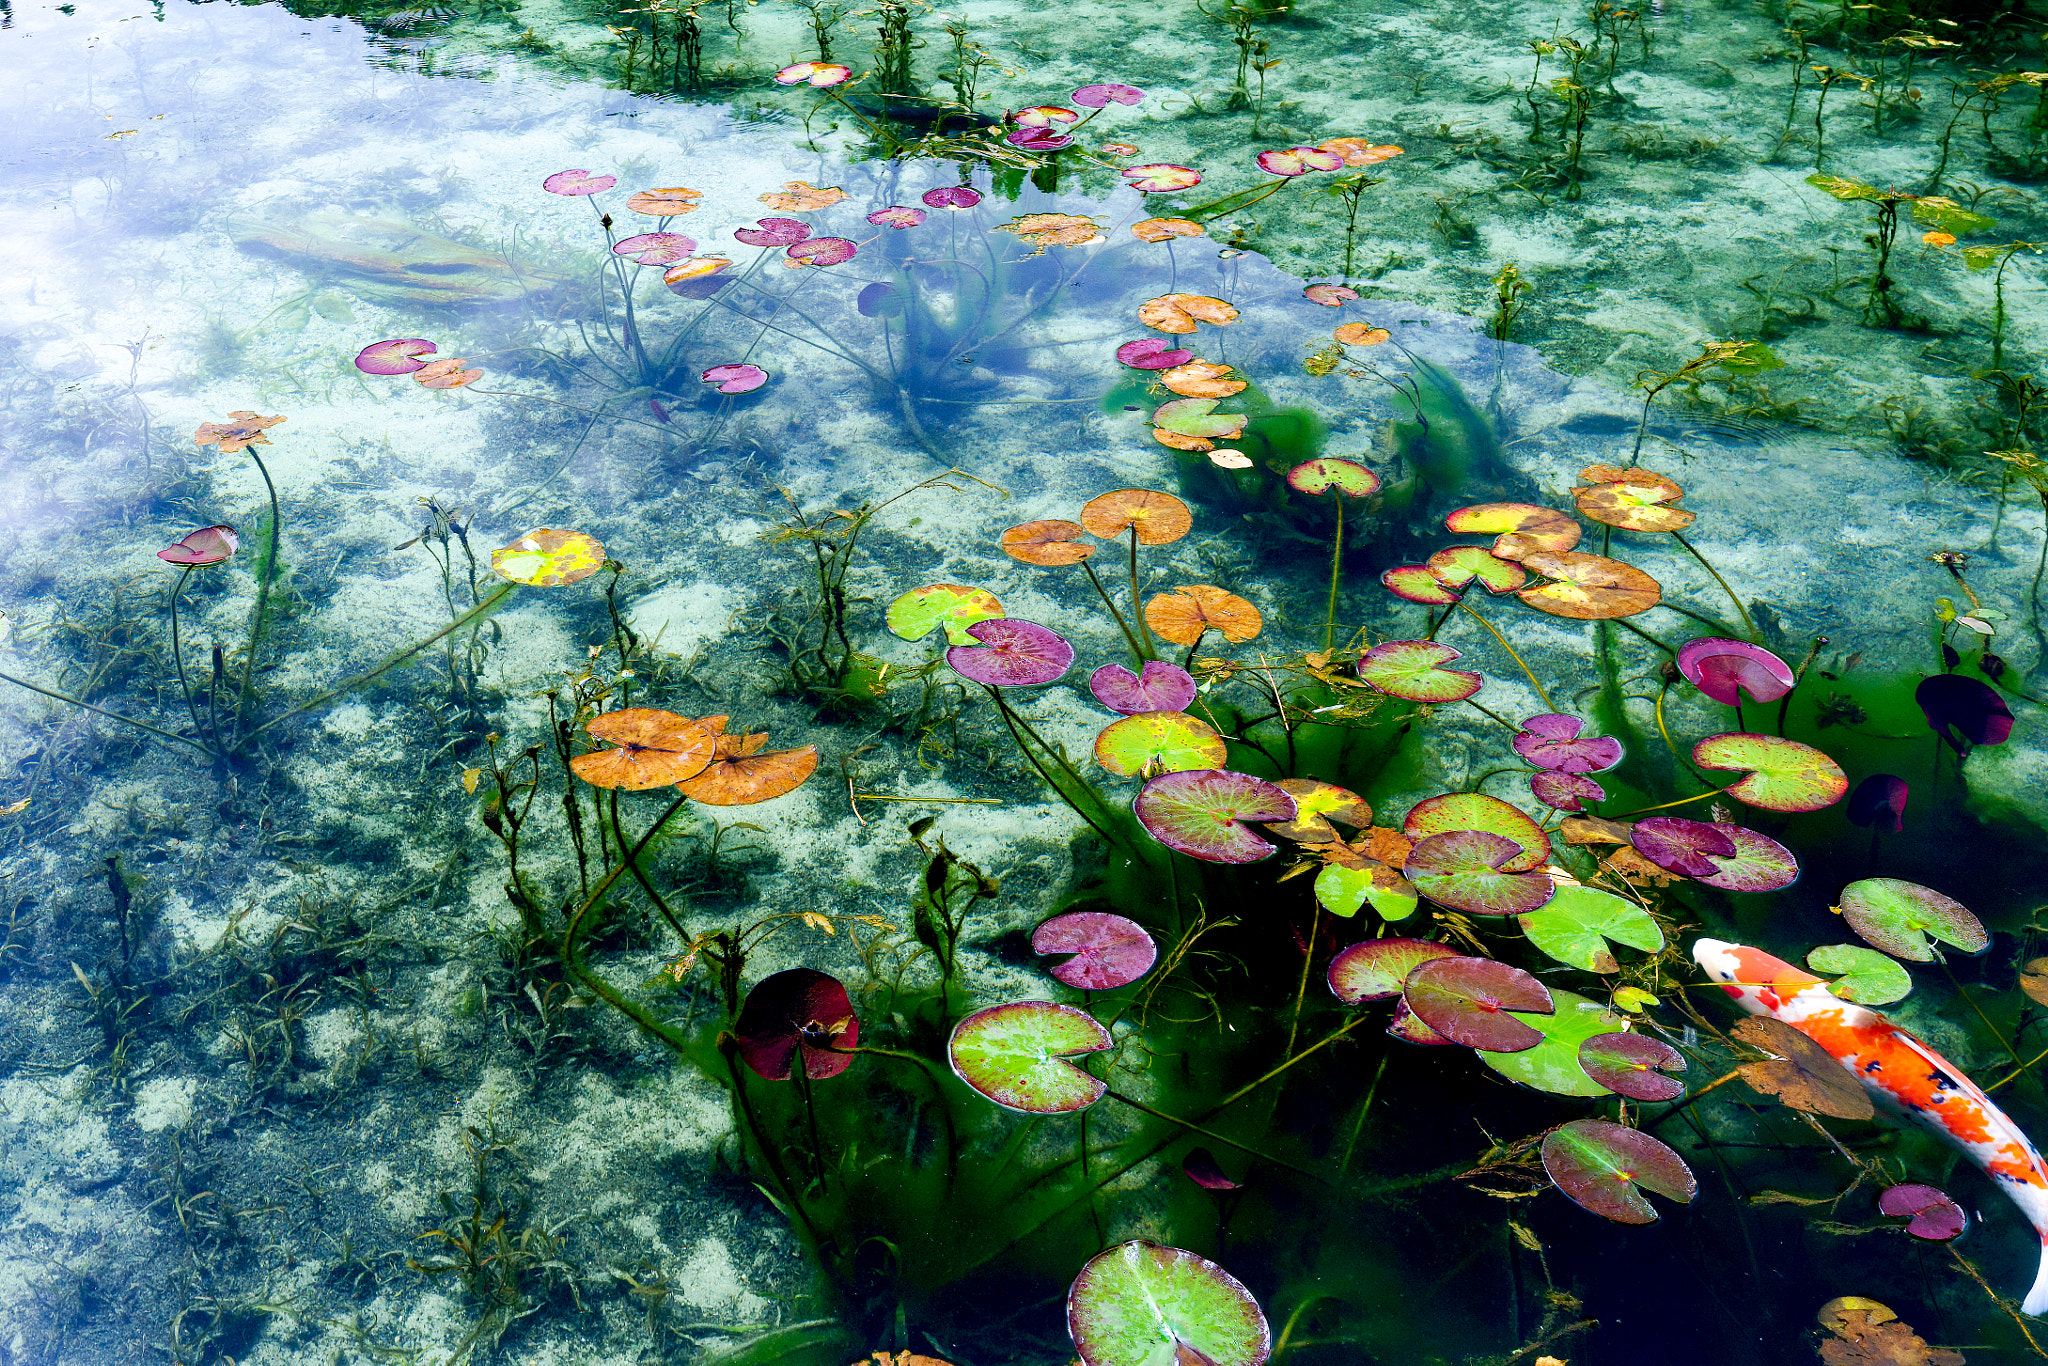 ZEISS Otus 28mm F1.4 sample photo. Monet's pond photography